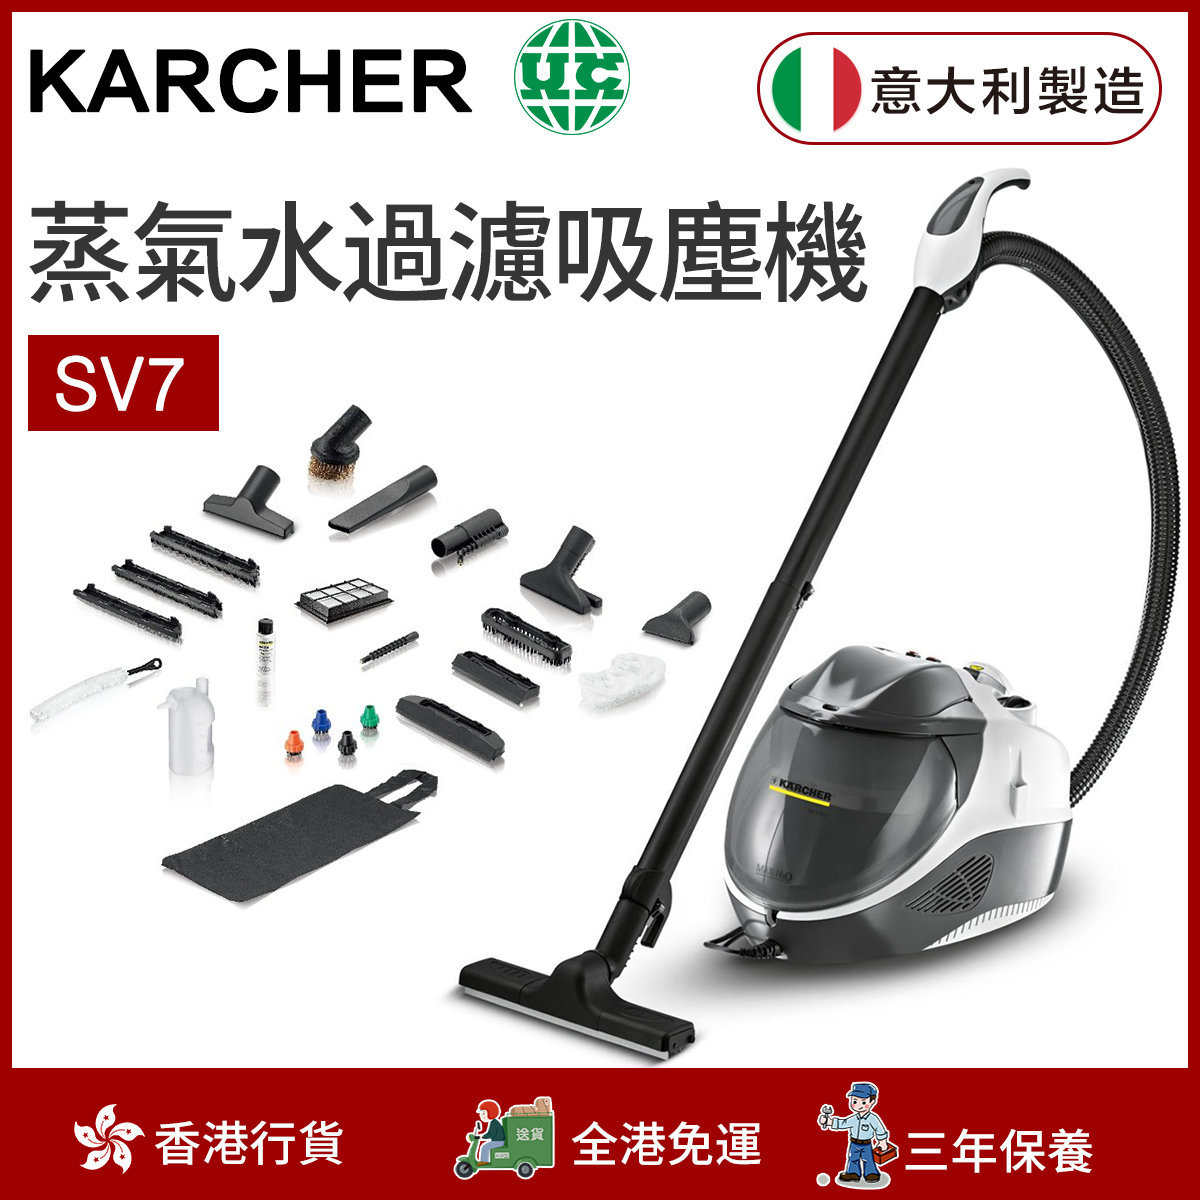 karcher sv7 蒸气水过滤吸尘机(香港行货)